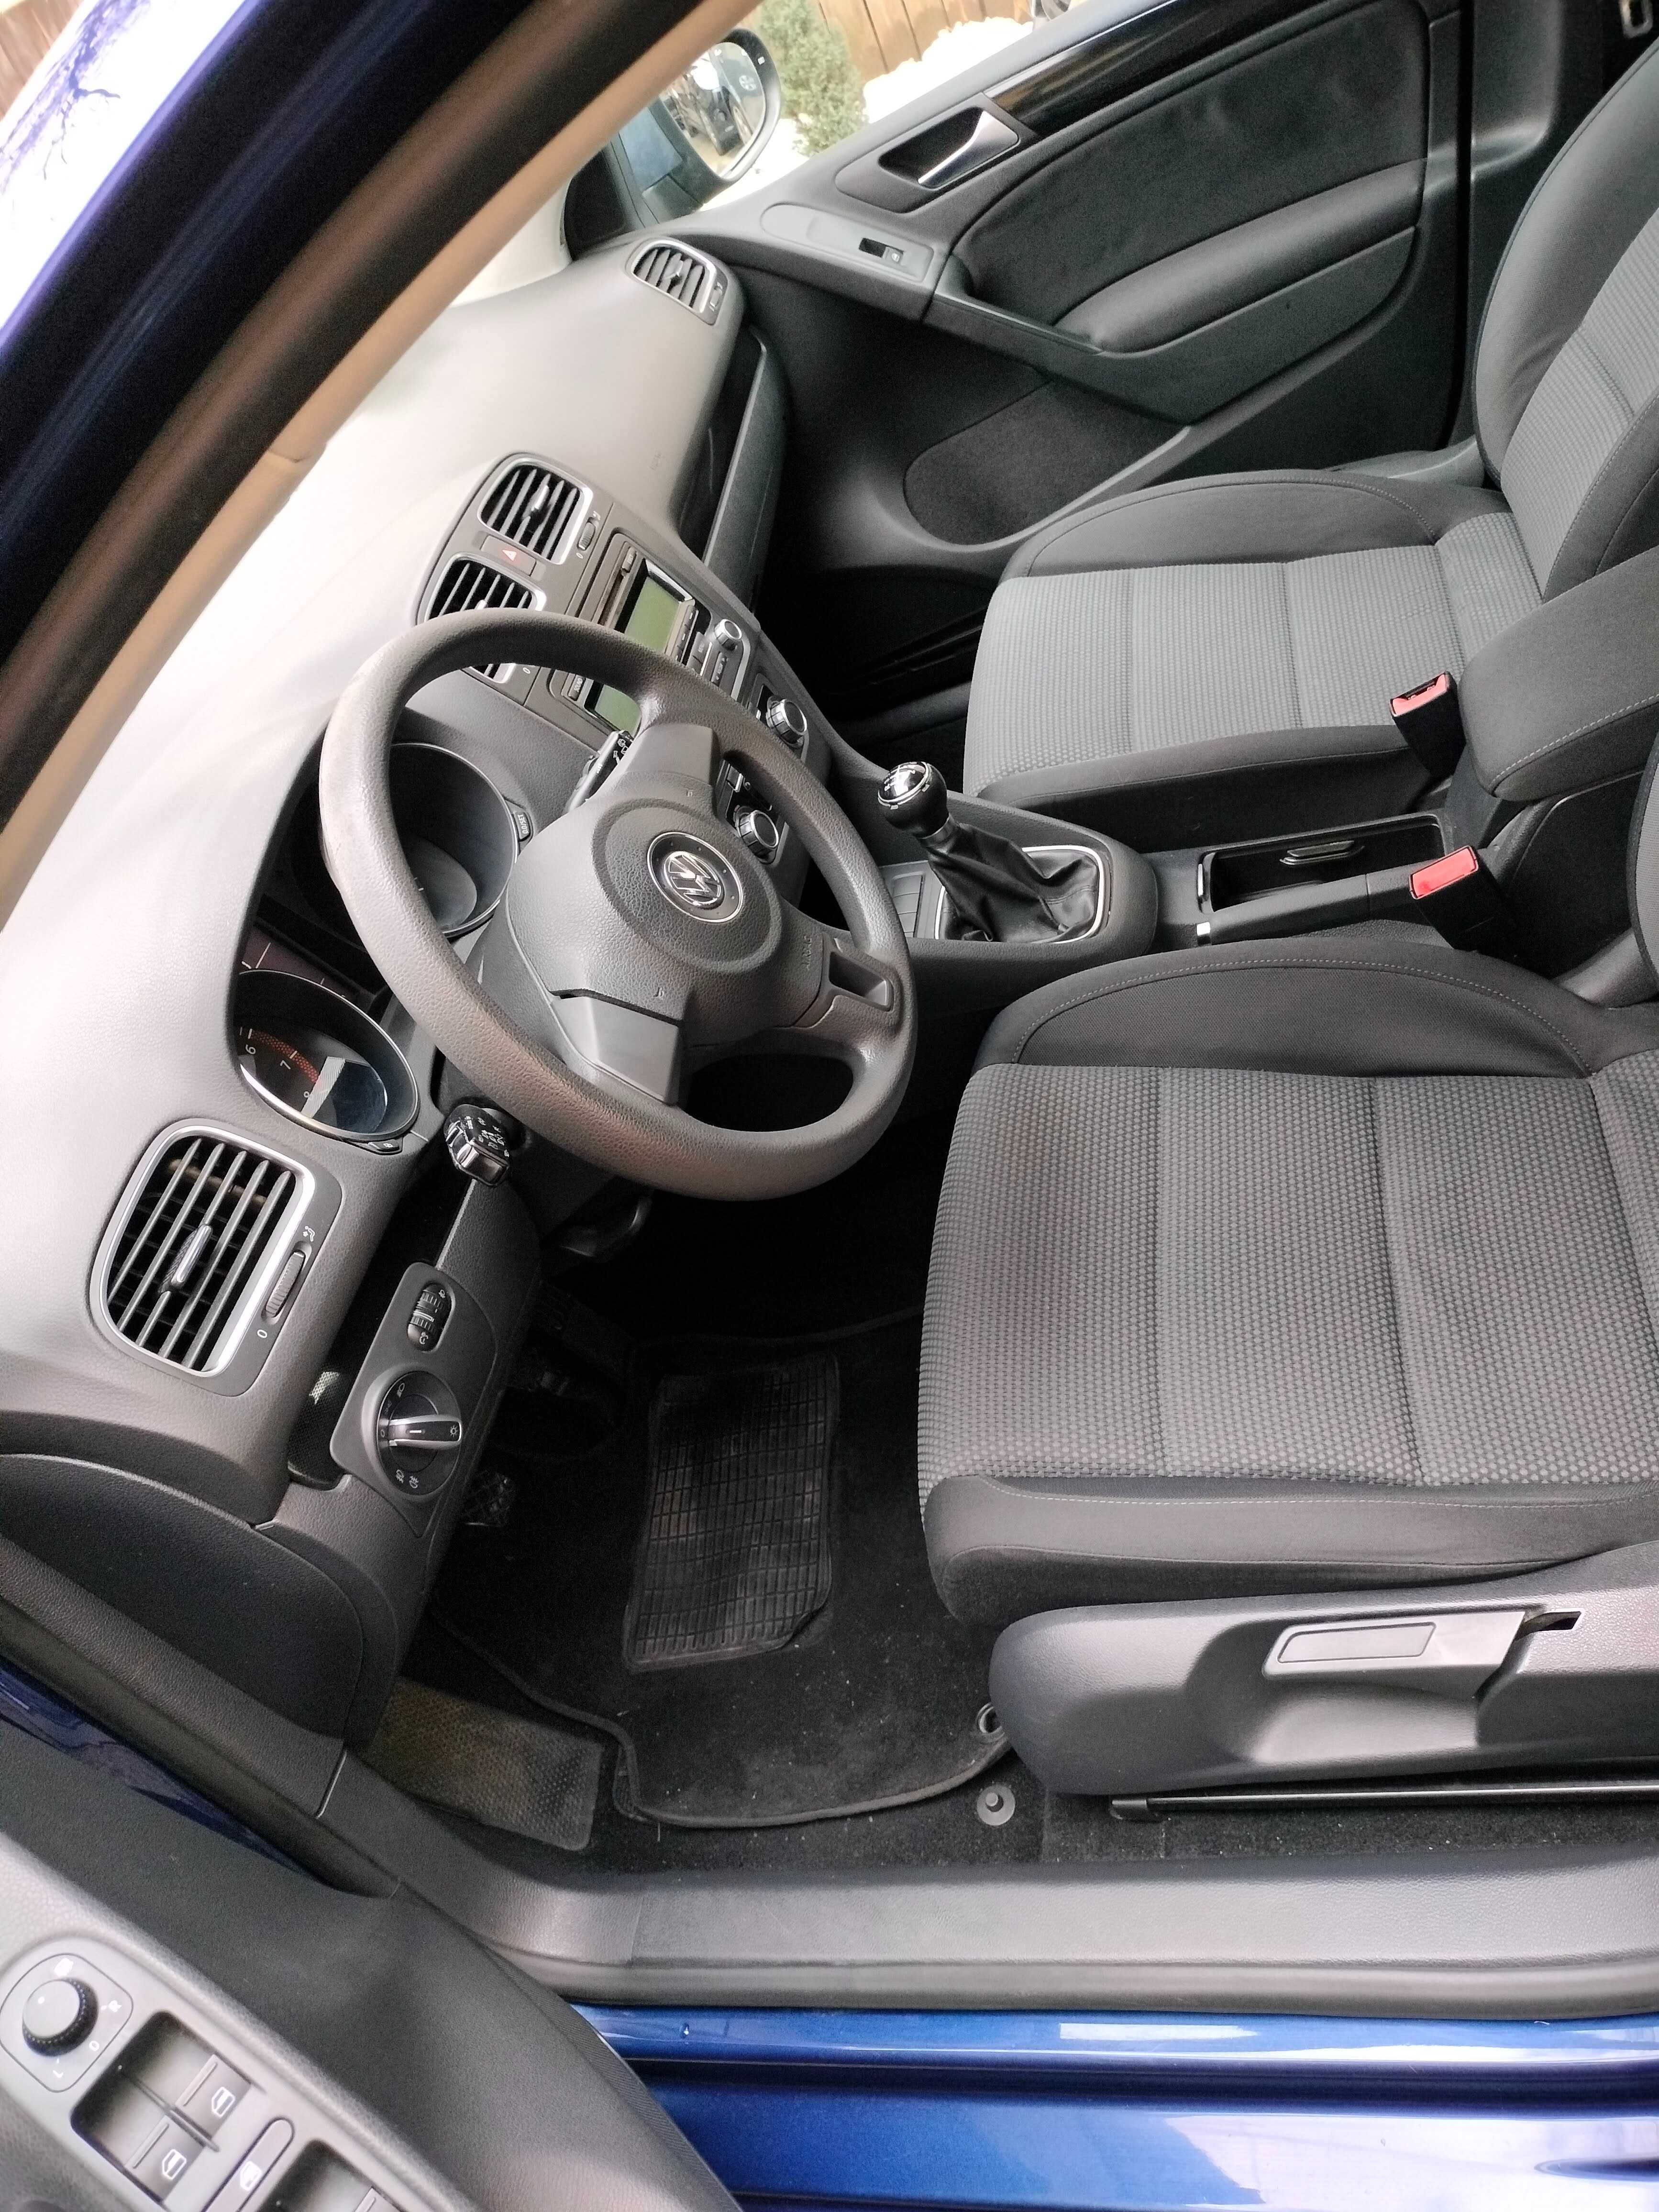 VW Golf 6 Comfortline 1.4, benzina, 122 cp, Euro 5, import Germania